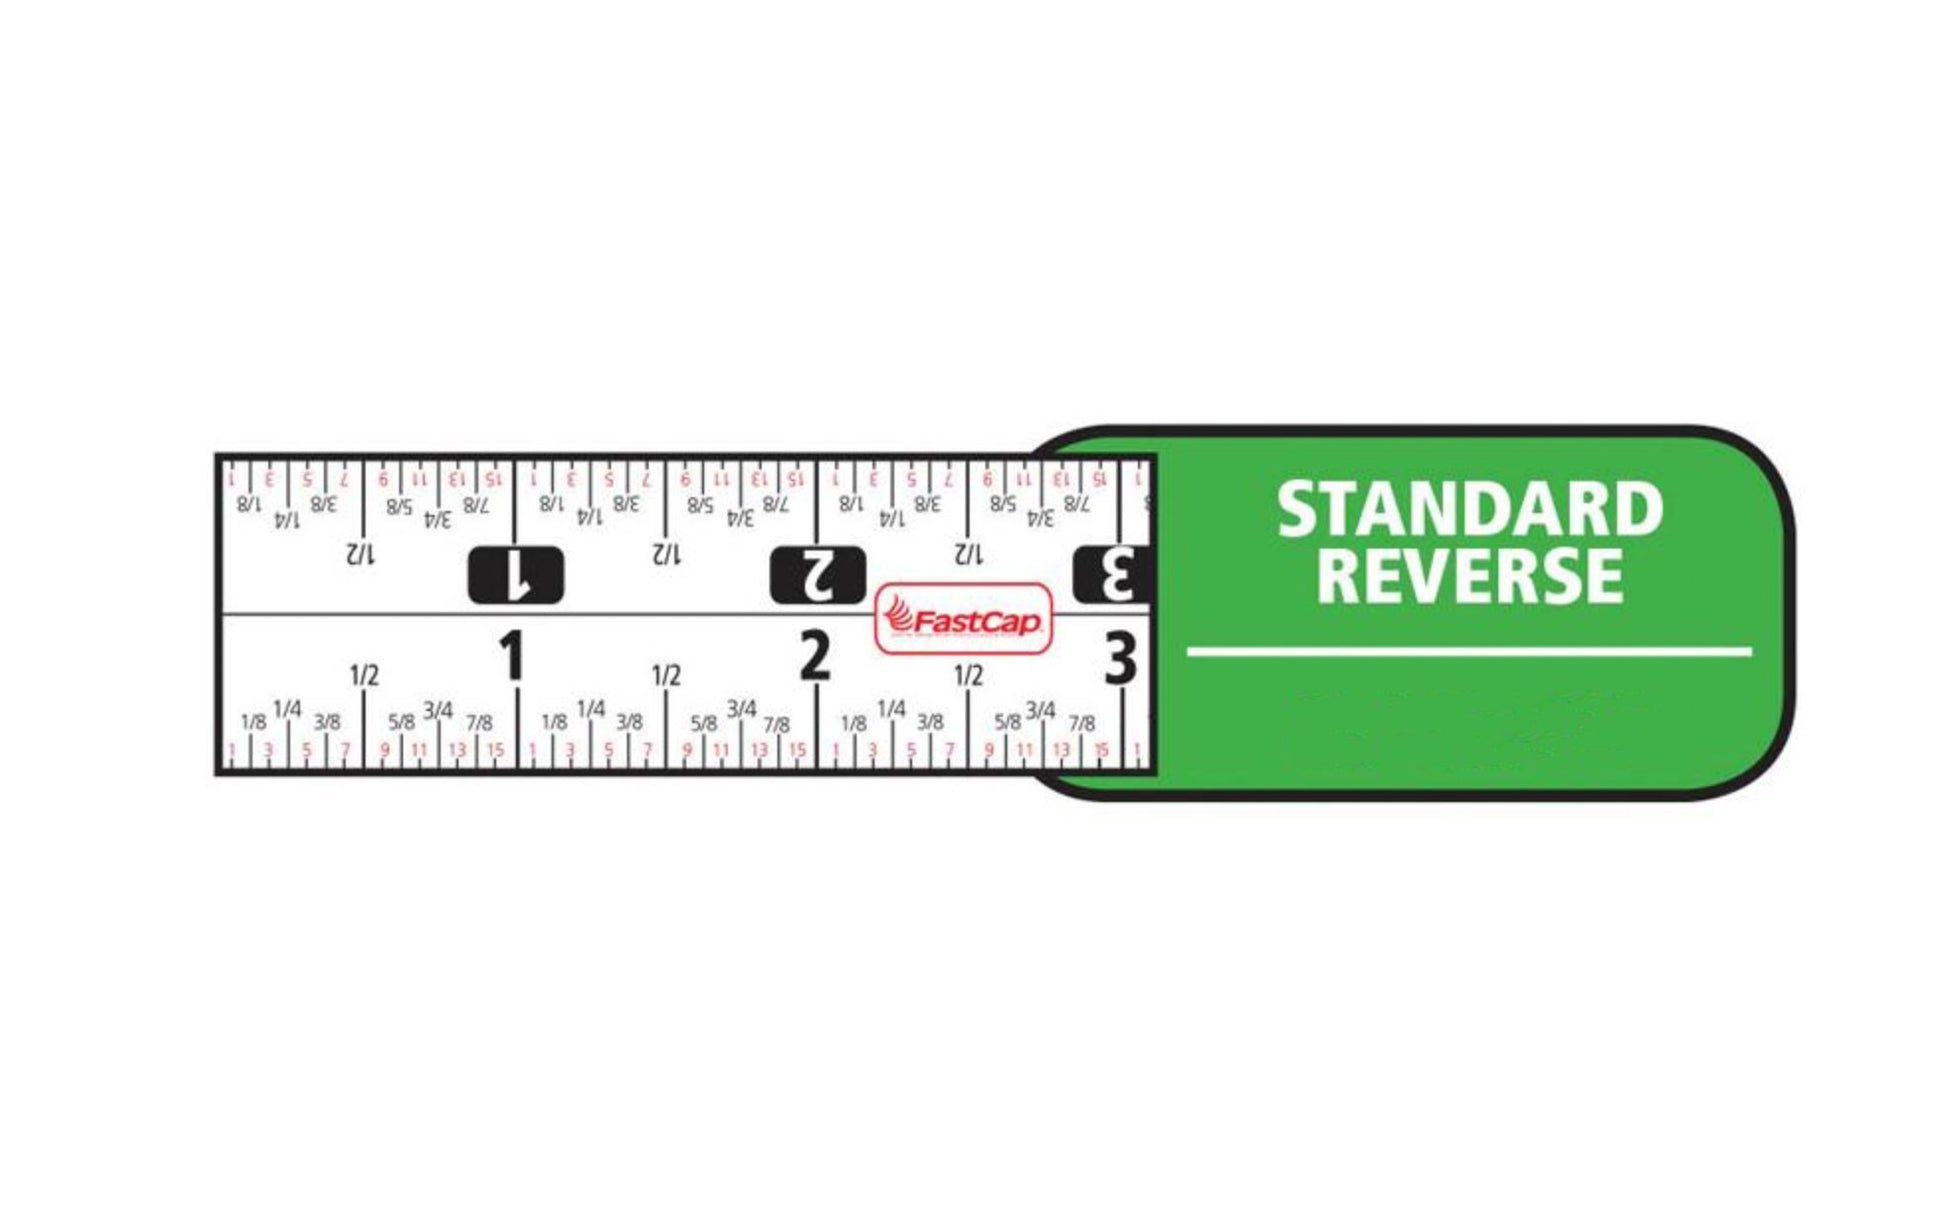 FastCap Mini Tape Measure - Model No. PSSR-6 MINI ~ Lefty / Righty style ~ High-contrast 5/8" wide blade ~ 6' long tape ~ Erasable notepad ~ Standard Reverse - Mini Green Tape Measure Fastcap - 2"  x  2" x  1" - 663807024992 - Fastcap Small Tape Measure - 6 feet long - Fastcap Minitape - Locks